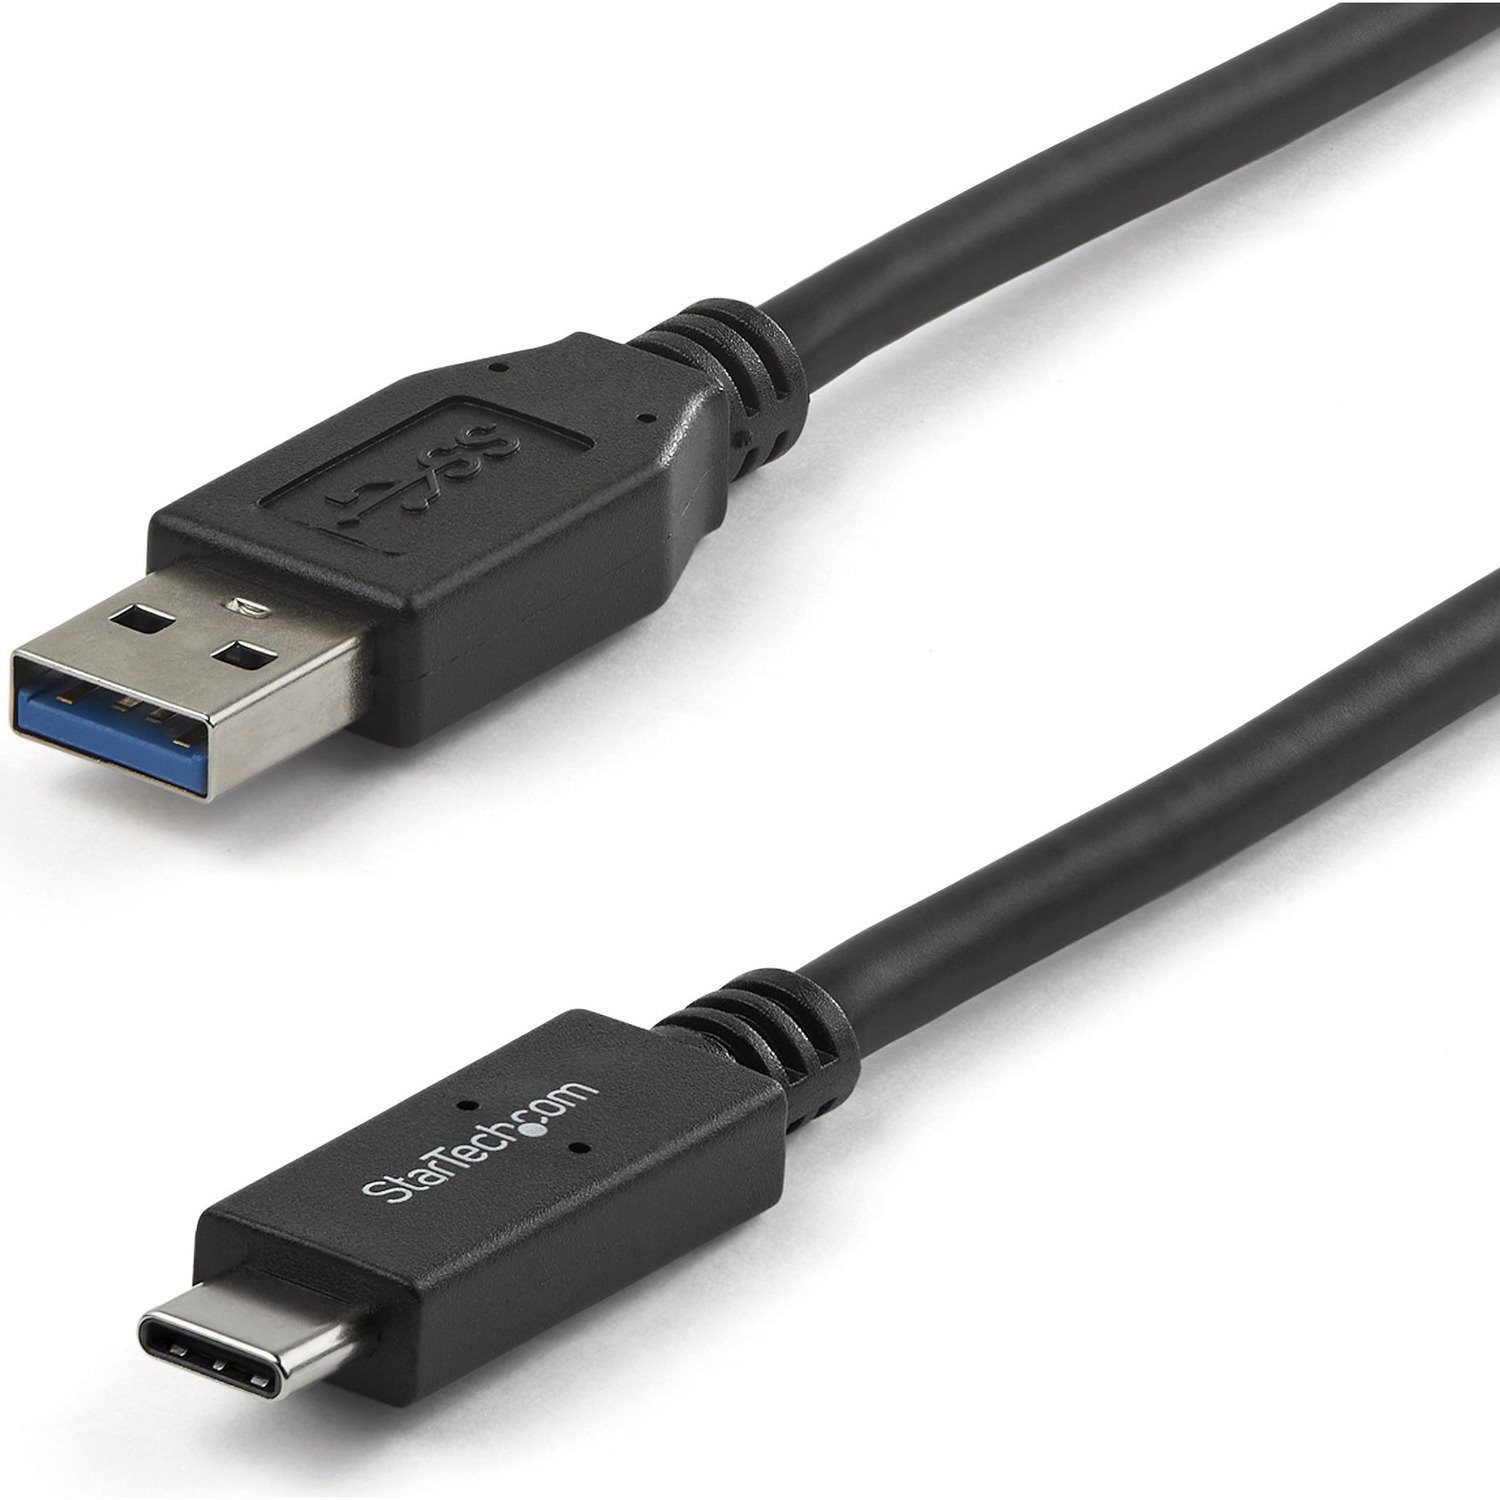 StarTech.com 3 ft 1m USB to USB C Cable - USB 3.1 10Gpbs - USB-IF Certified - USB A to USB C Cable - USB 3.1 Type C Cable